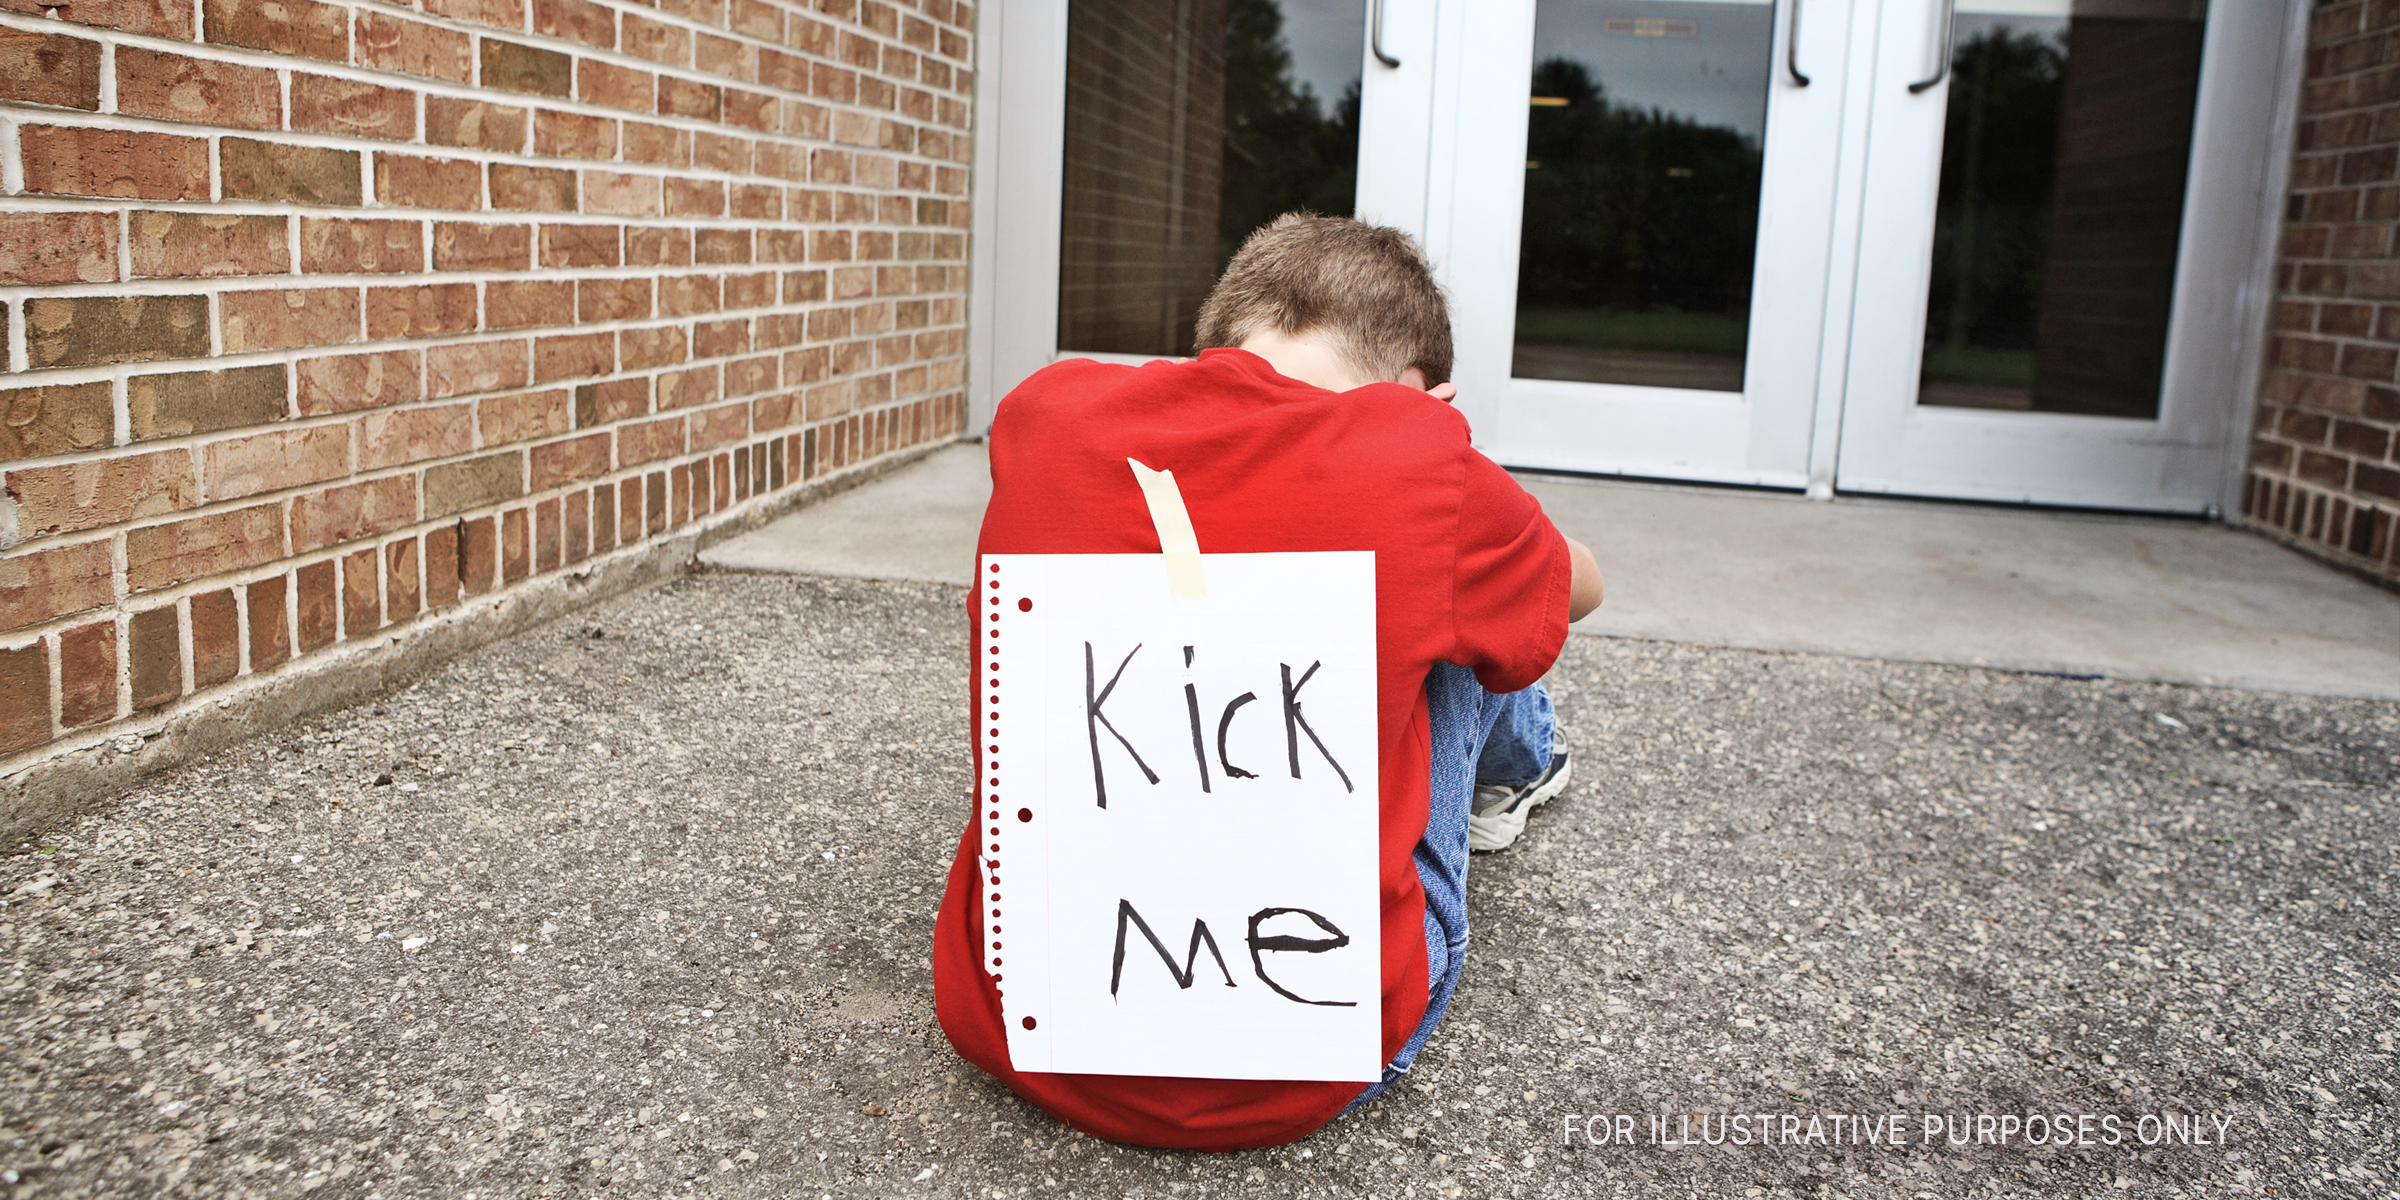 Bullied Boy Crying Alone. | Source: Shutterstock